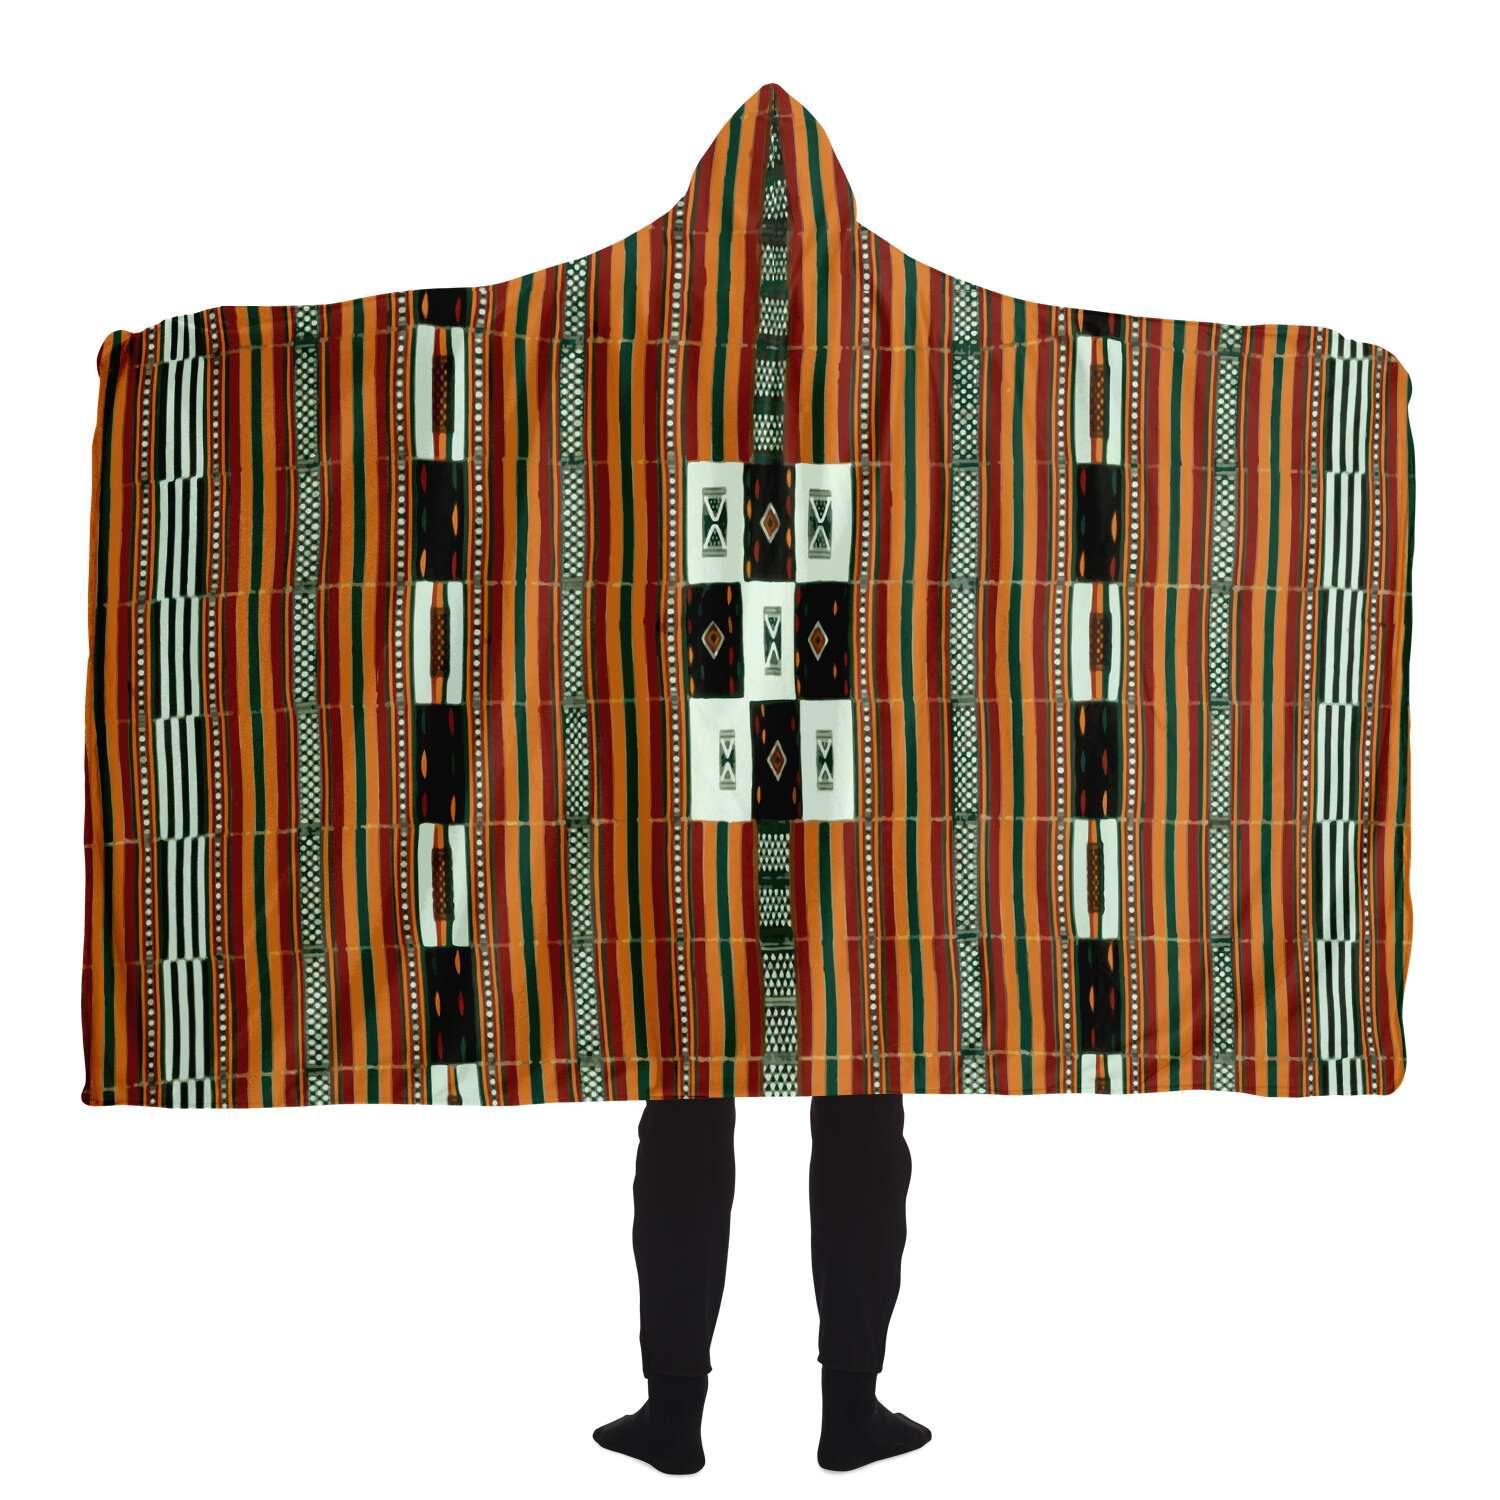 Hooded Blanket - AOP Antique Gao Culture Hooded Blanket, Timbuktu